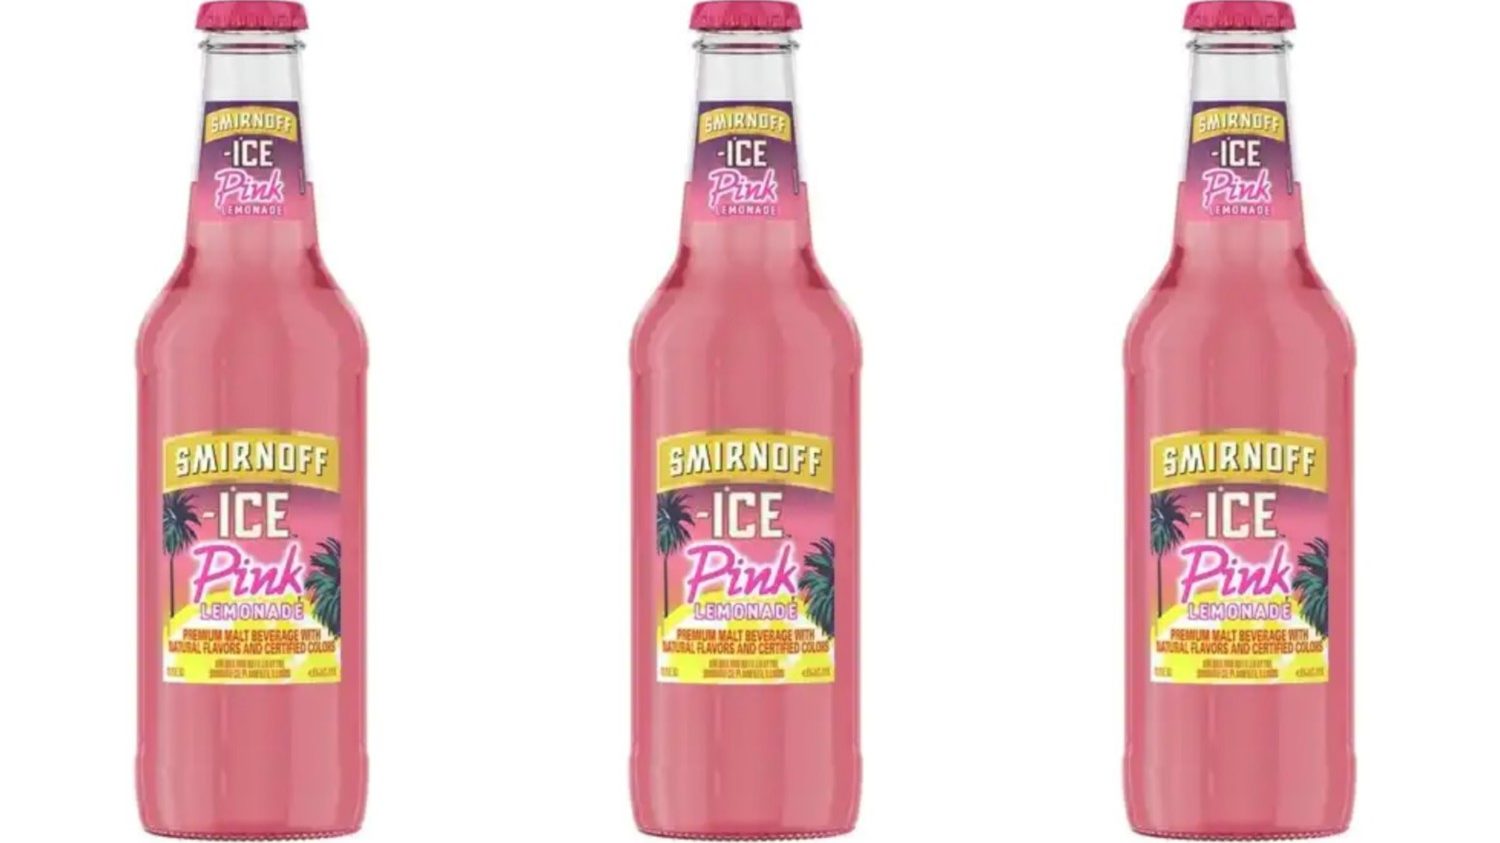 smirnoff ice flavors pink lemonade